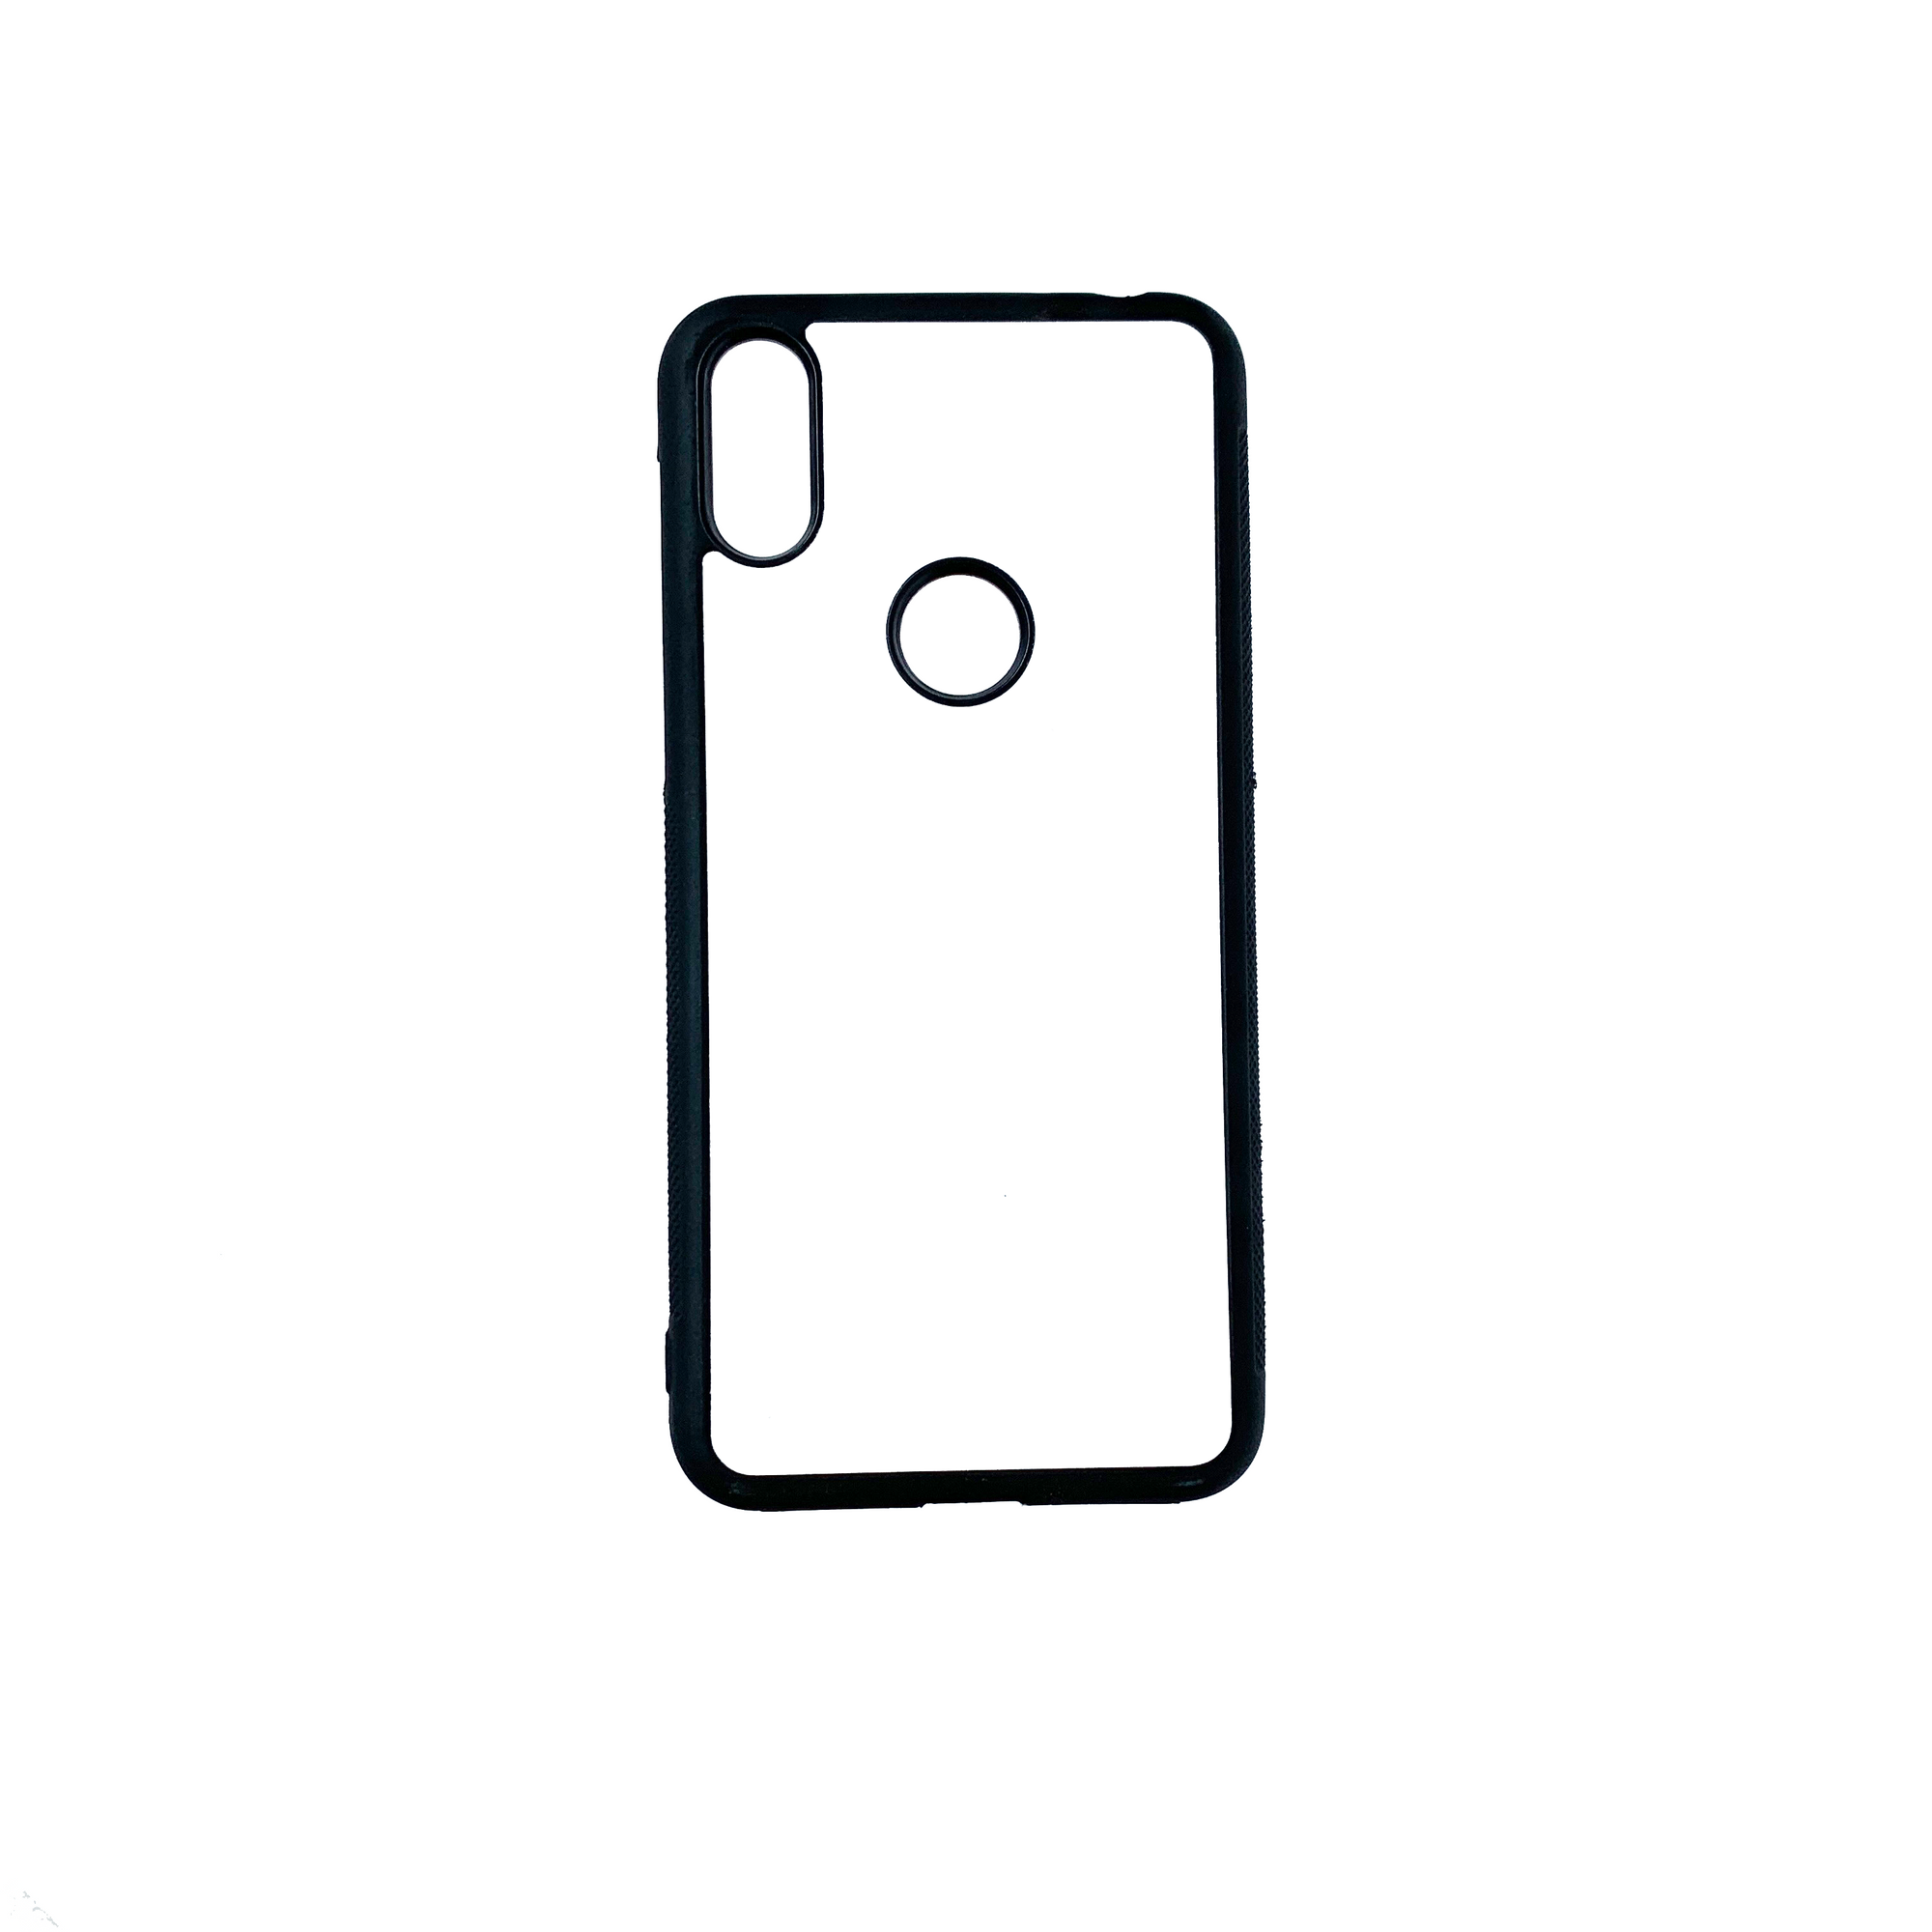 Neon Blanco iPhone 12 Mini – Silicone Case Pereira – Cases / Fundas /  Carcasas para iPhone, IPad, Airpods y Macbook